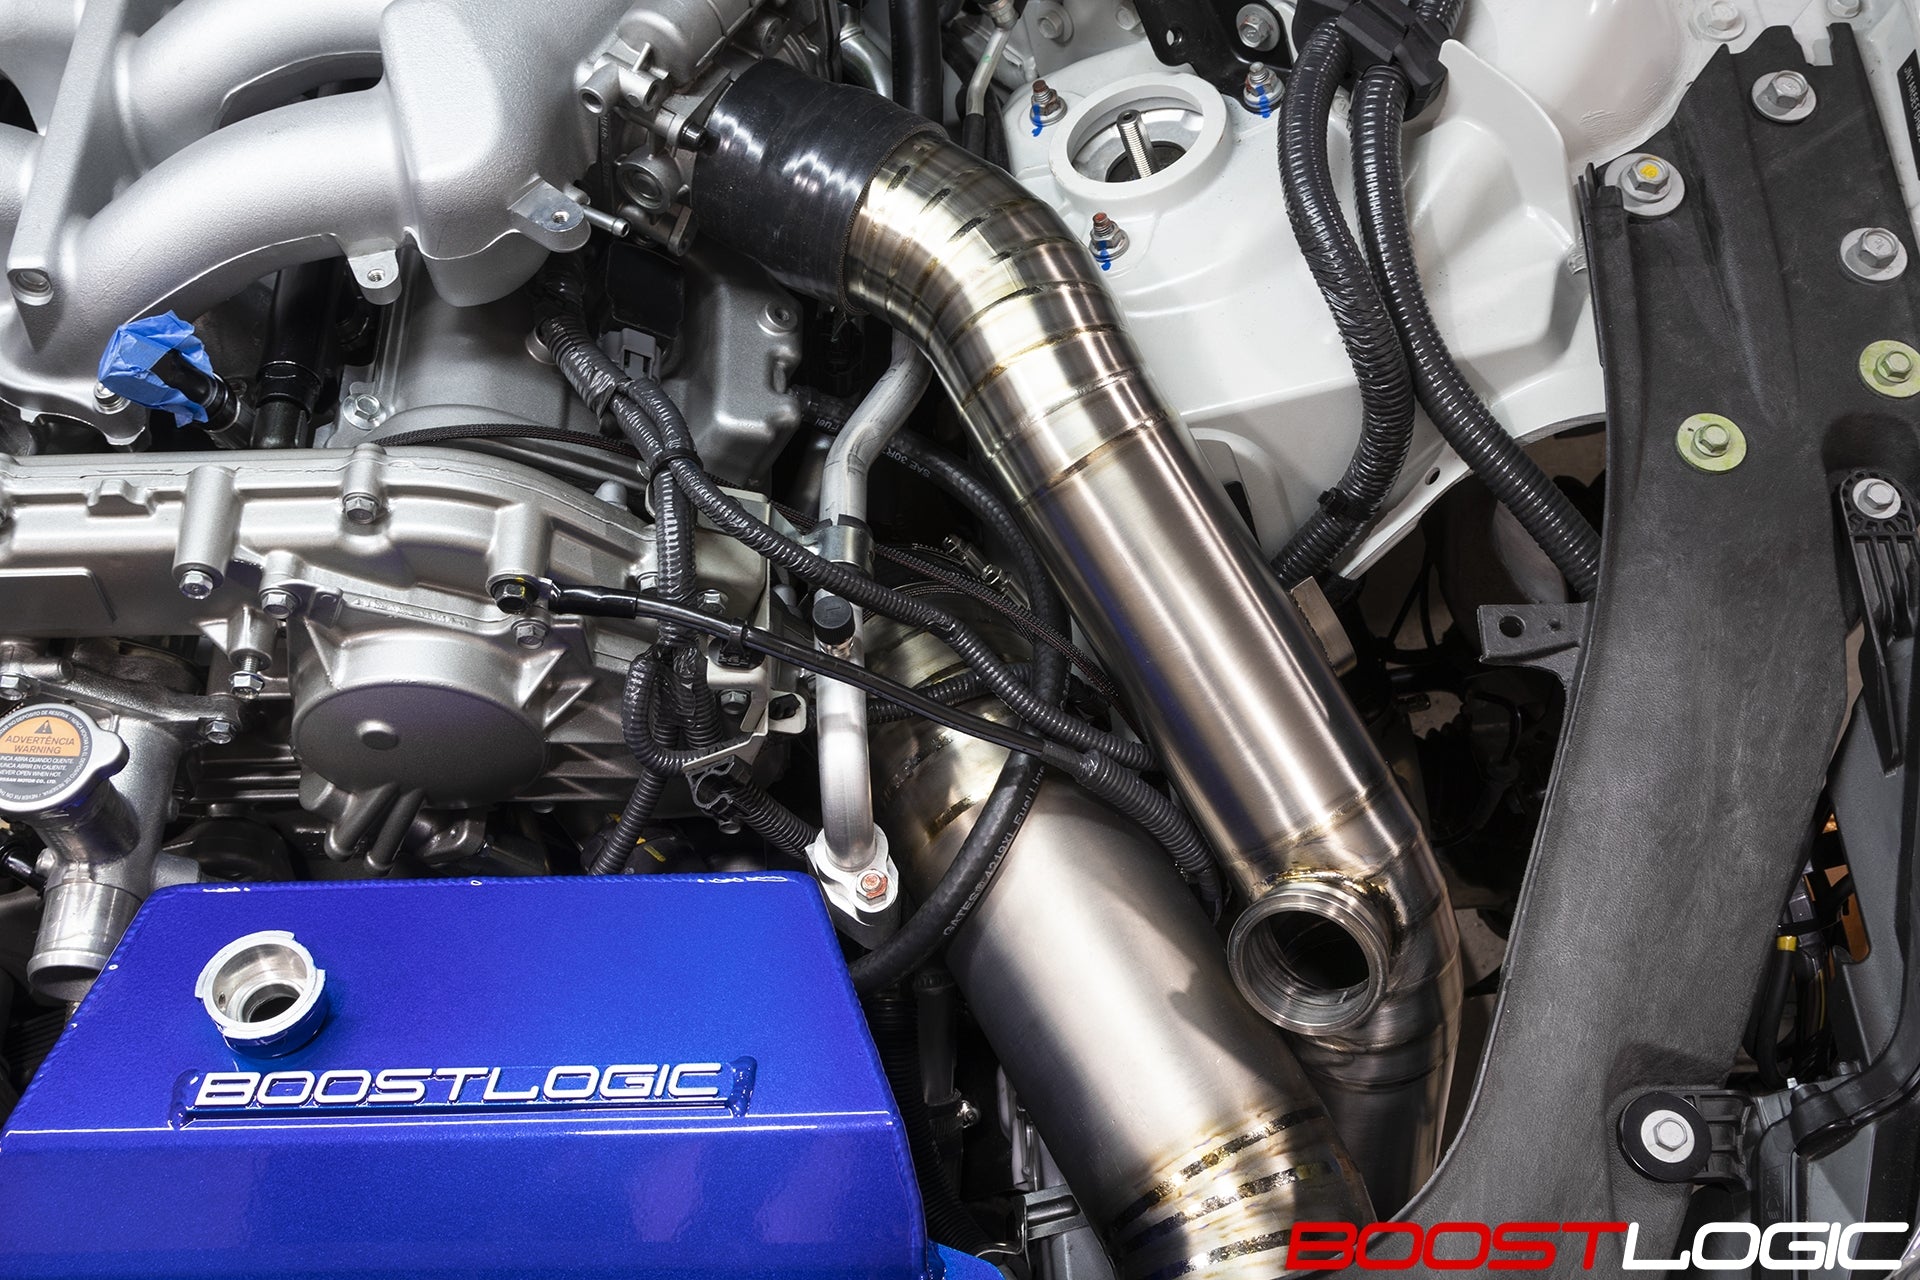 Boost Logic Titanium Upper Intercooler Pipes Nissan R35 GT-R 09+ 